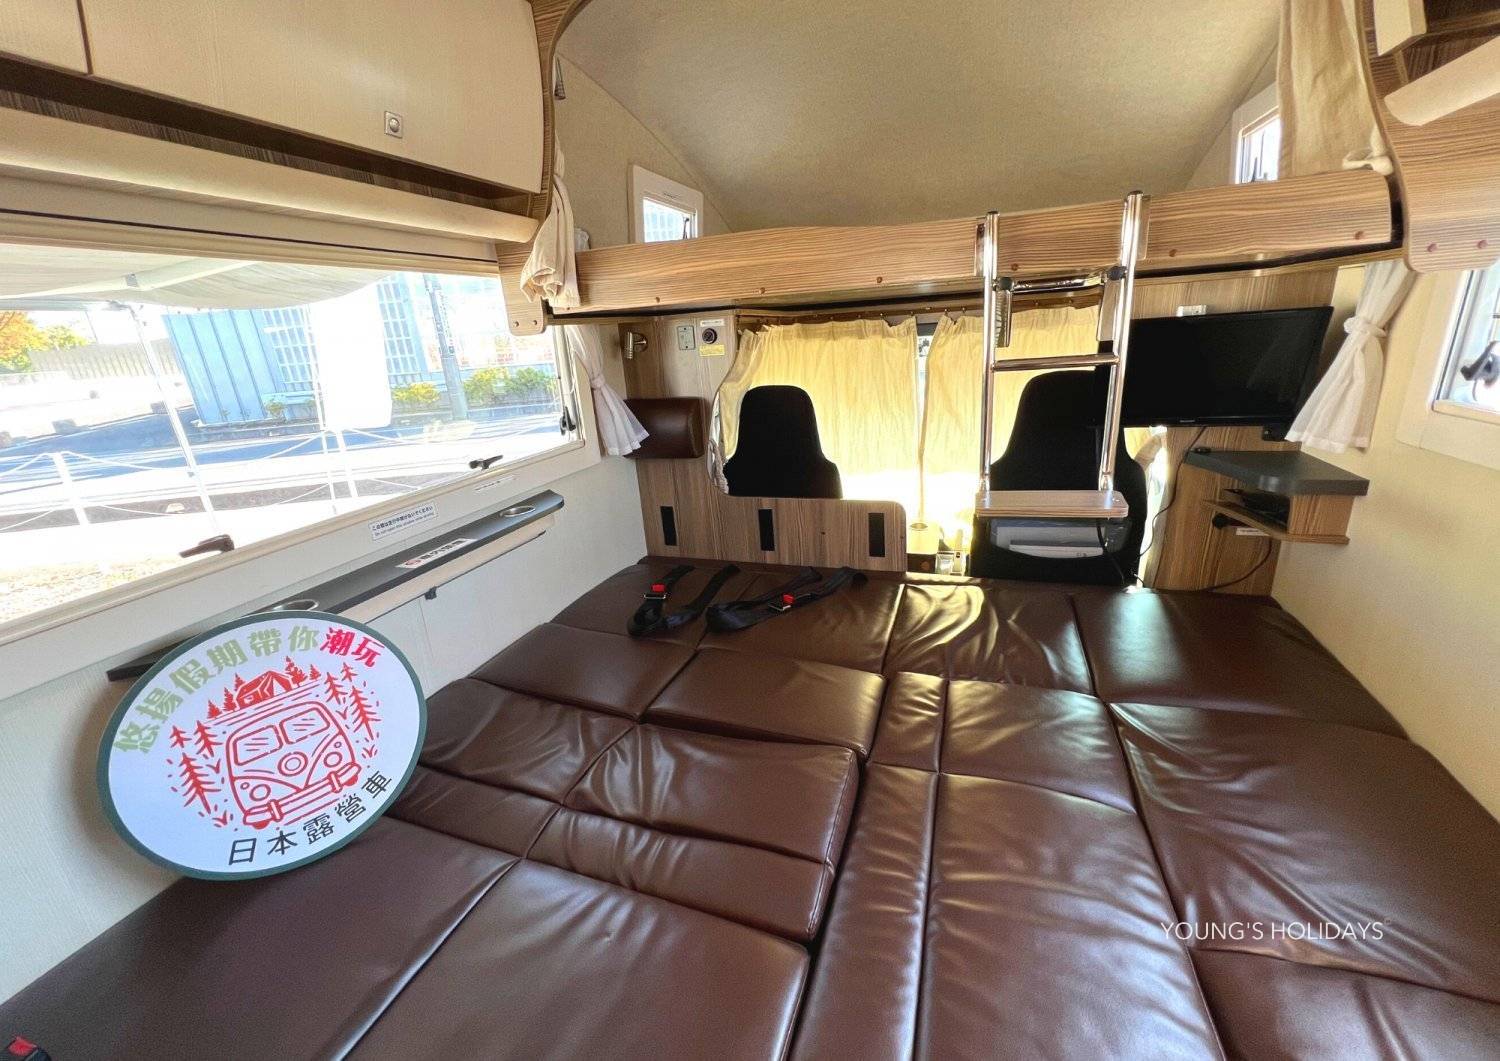 Young's Holidays 【Tokyo 】Japan 5ppl RV Caravan 24 hours Rental Experience(VT5) 2